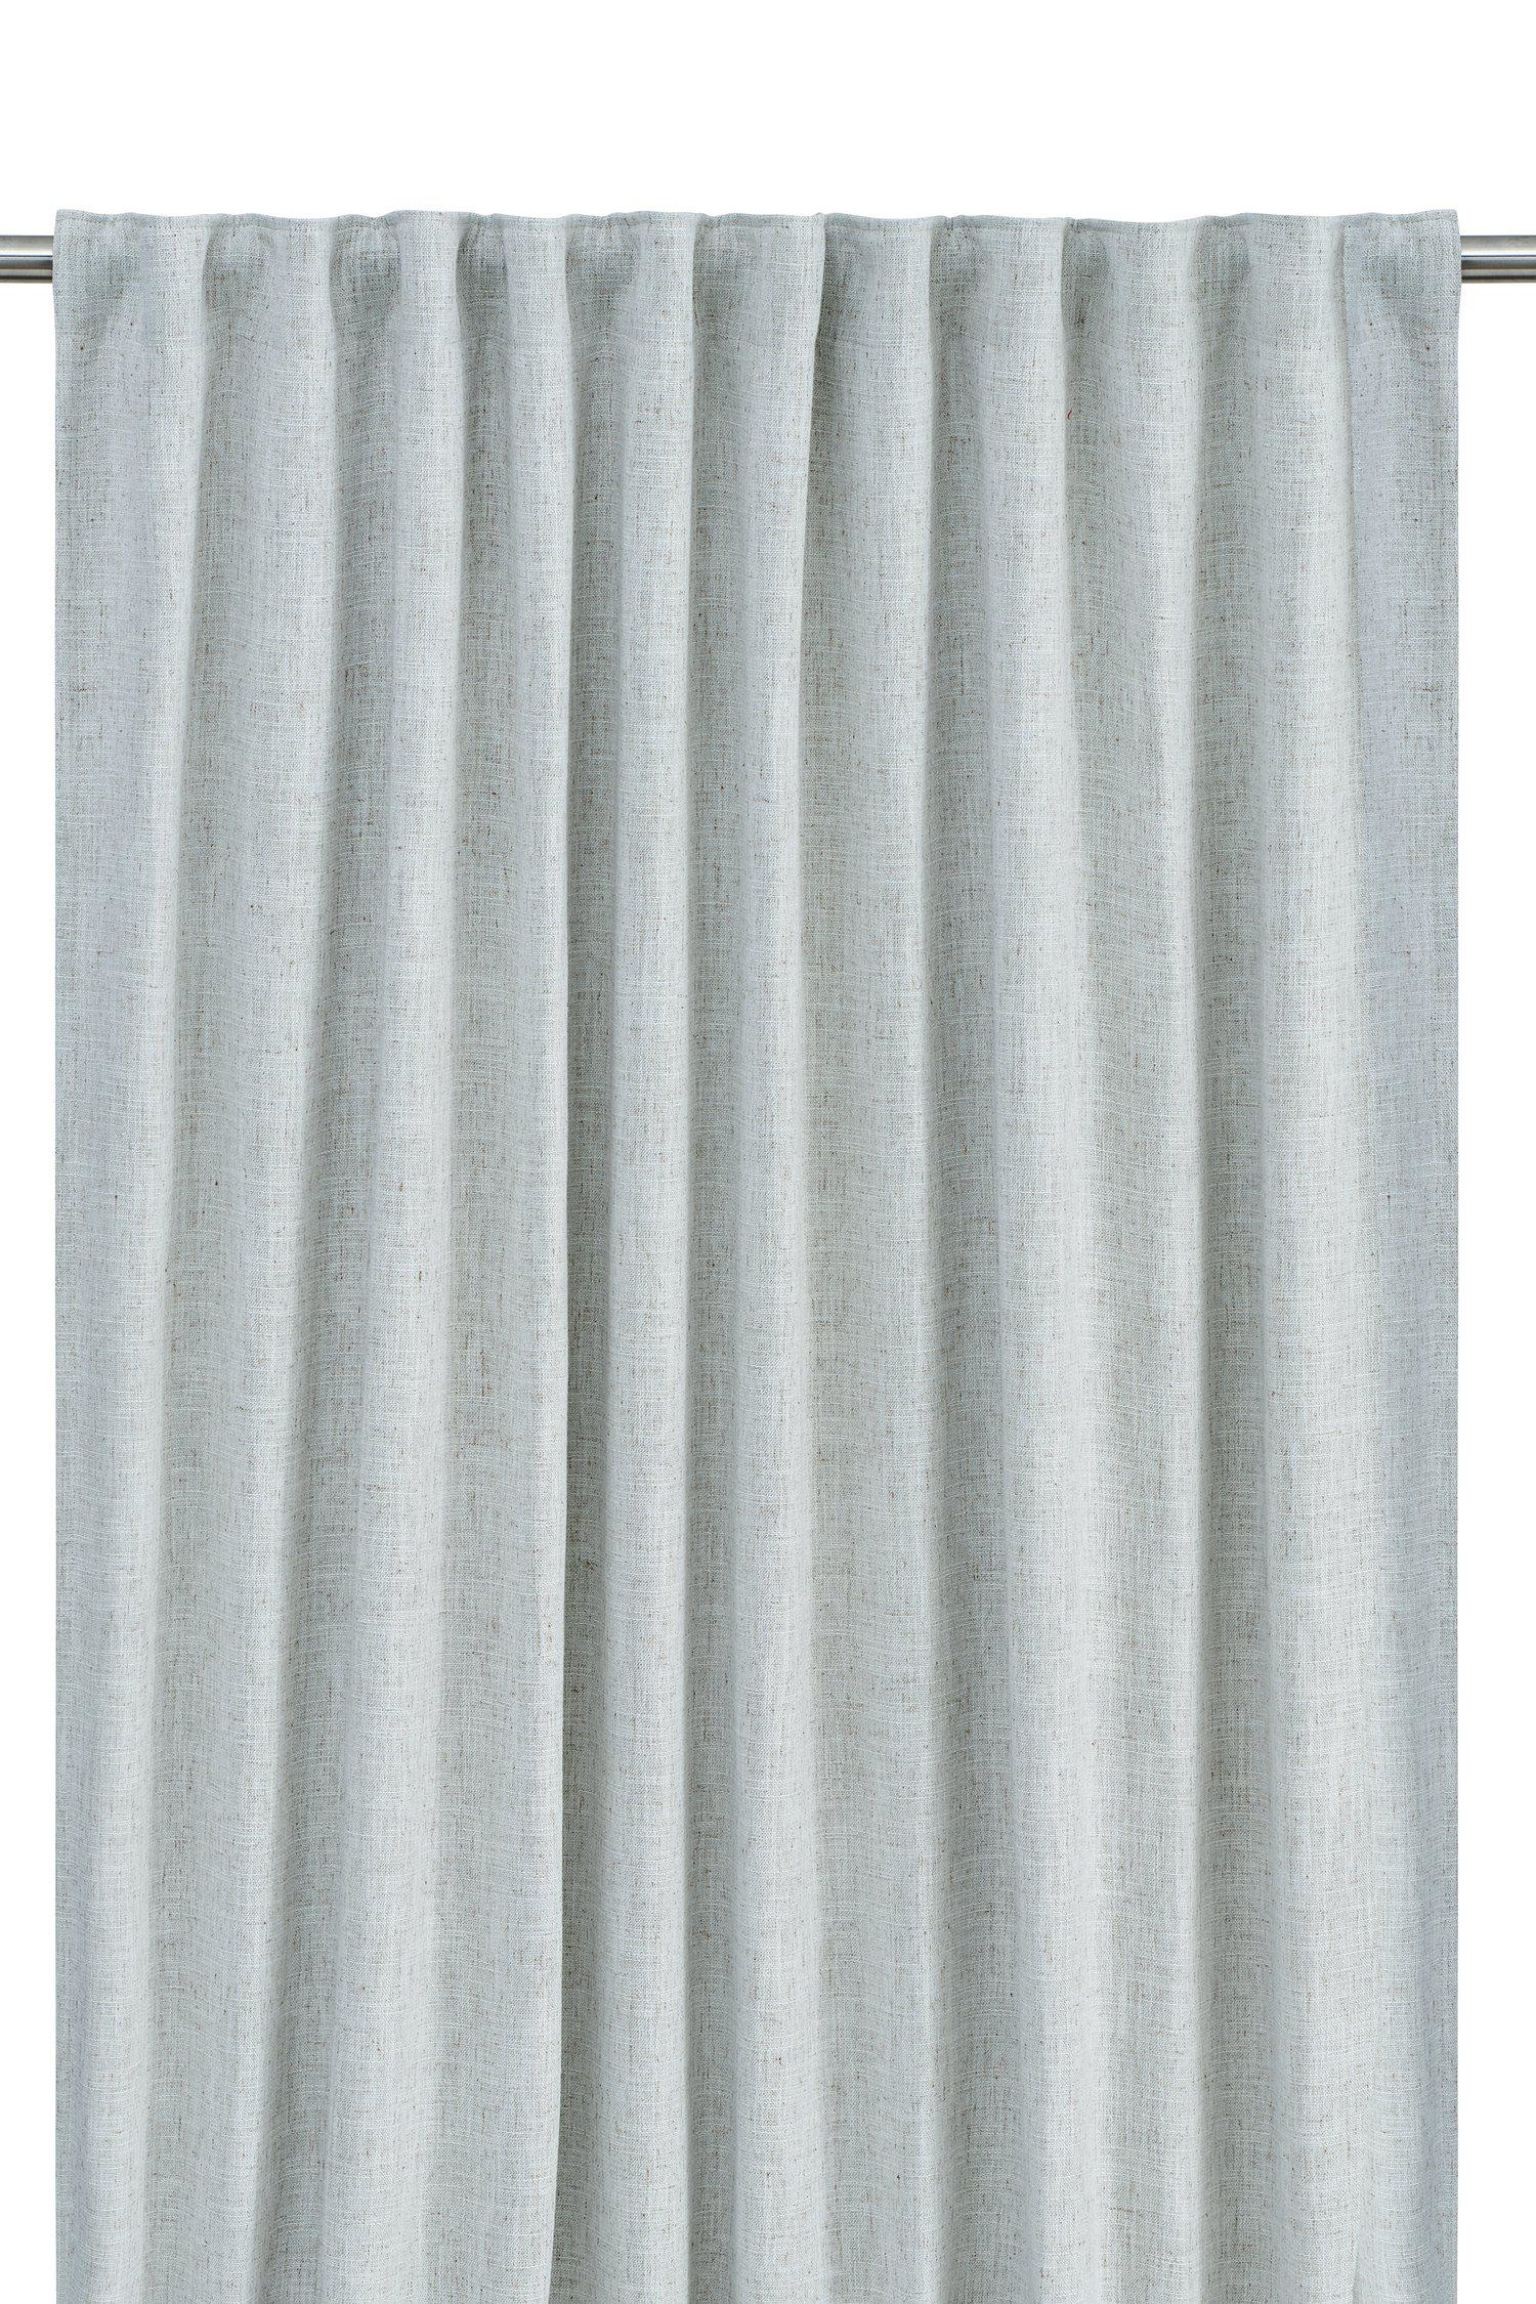 Svanefors Sten Curtain 1 Set - Off White 1250001002 | 1250001002